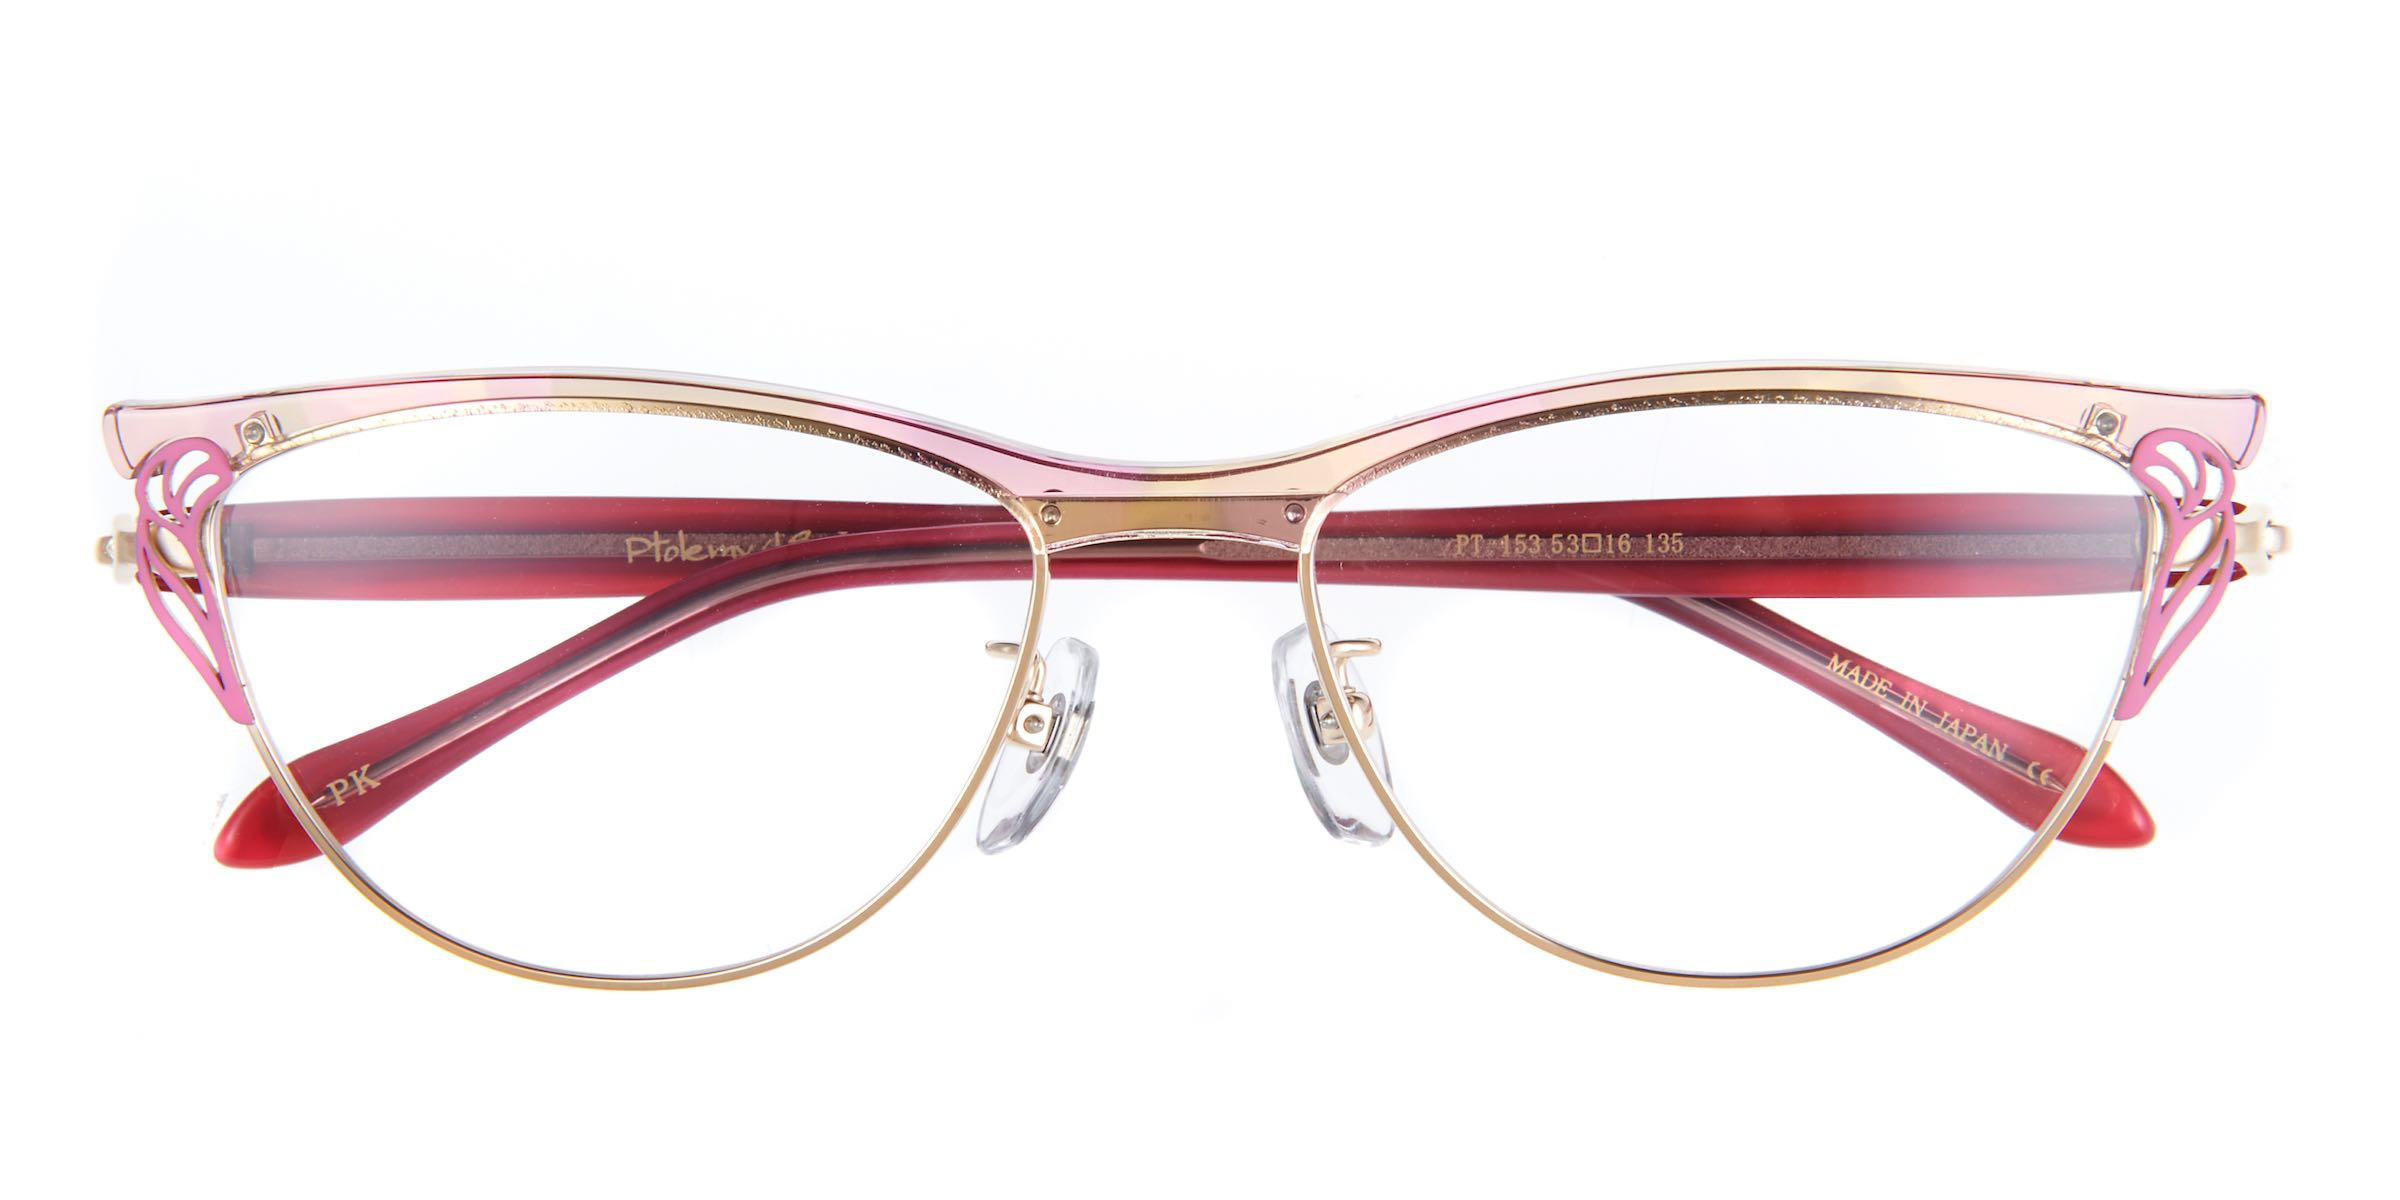 LUNA PT-153 / EYEWEAR :: Ptolemy48（トレミーフォーティエイト） 日本の眼鏡職人が作り出した眼鏡フレームブランド